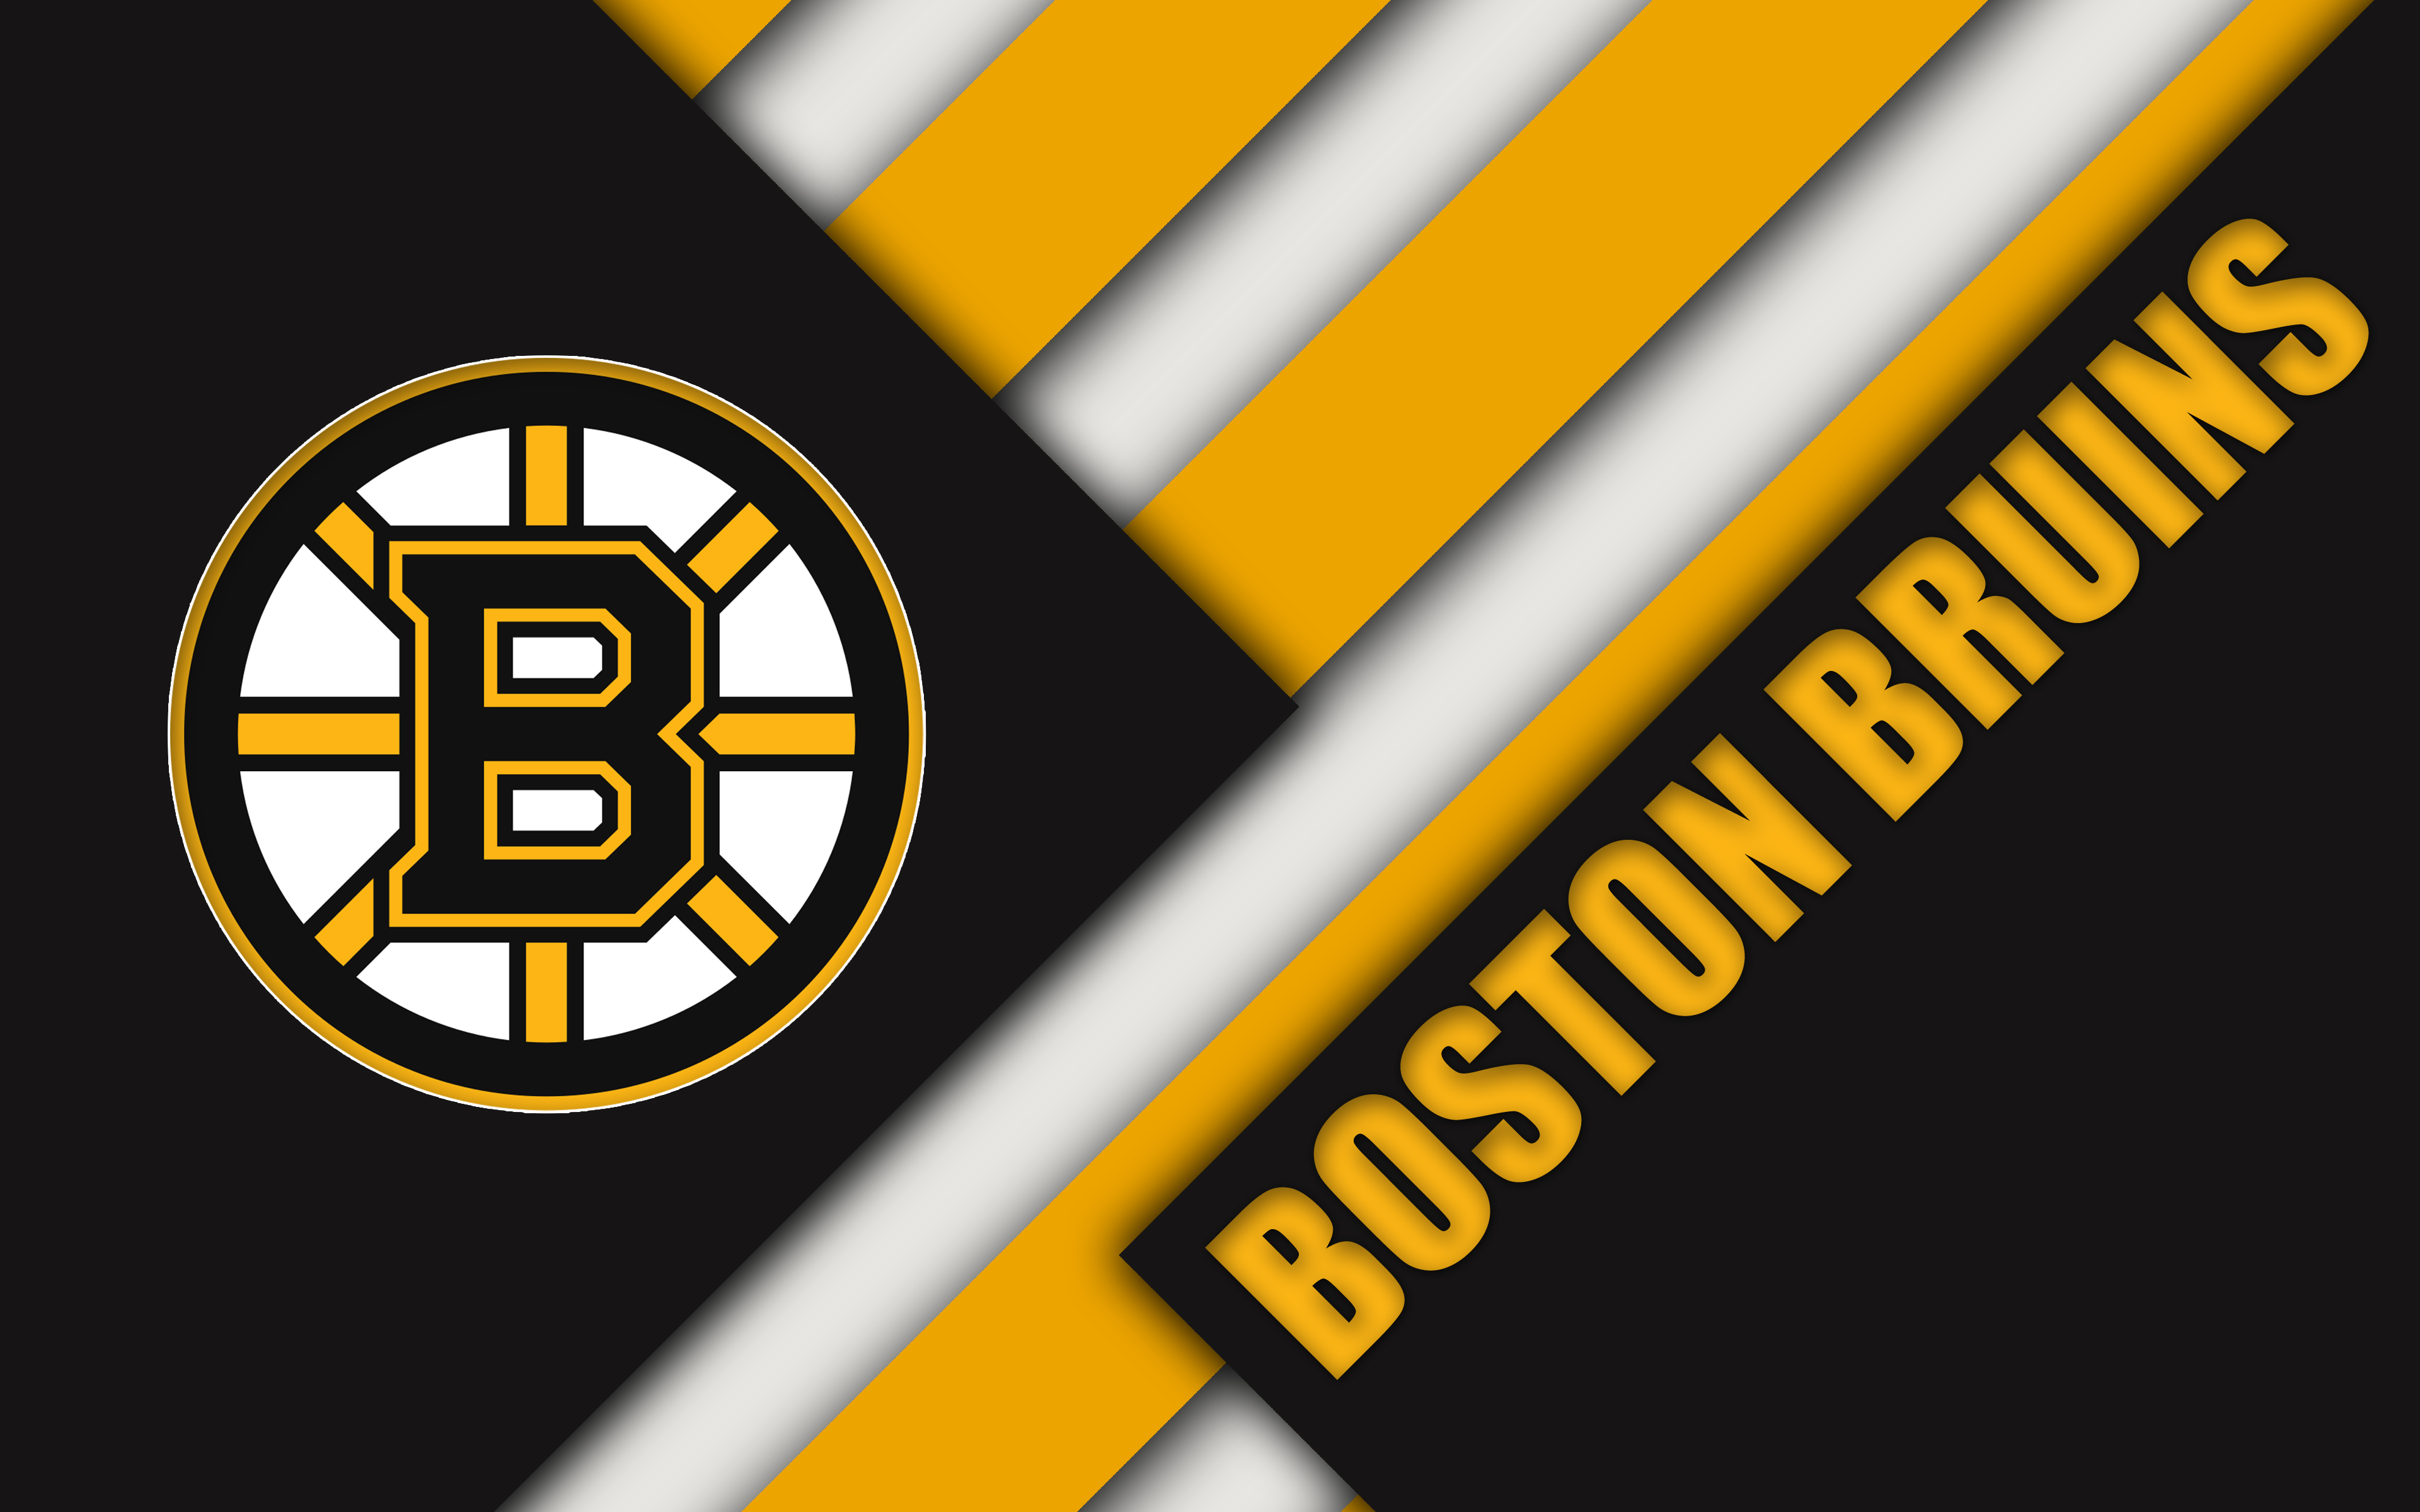 Wallpaper Boston Bruins Bear Logo Boston Bruins Logo Hd Full Hd